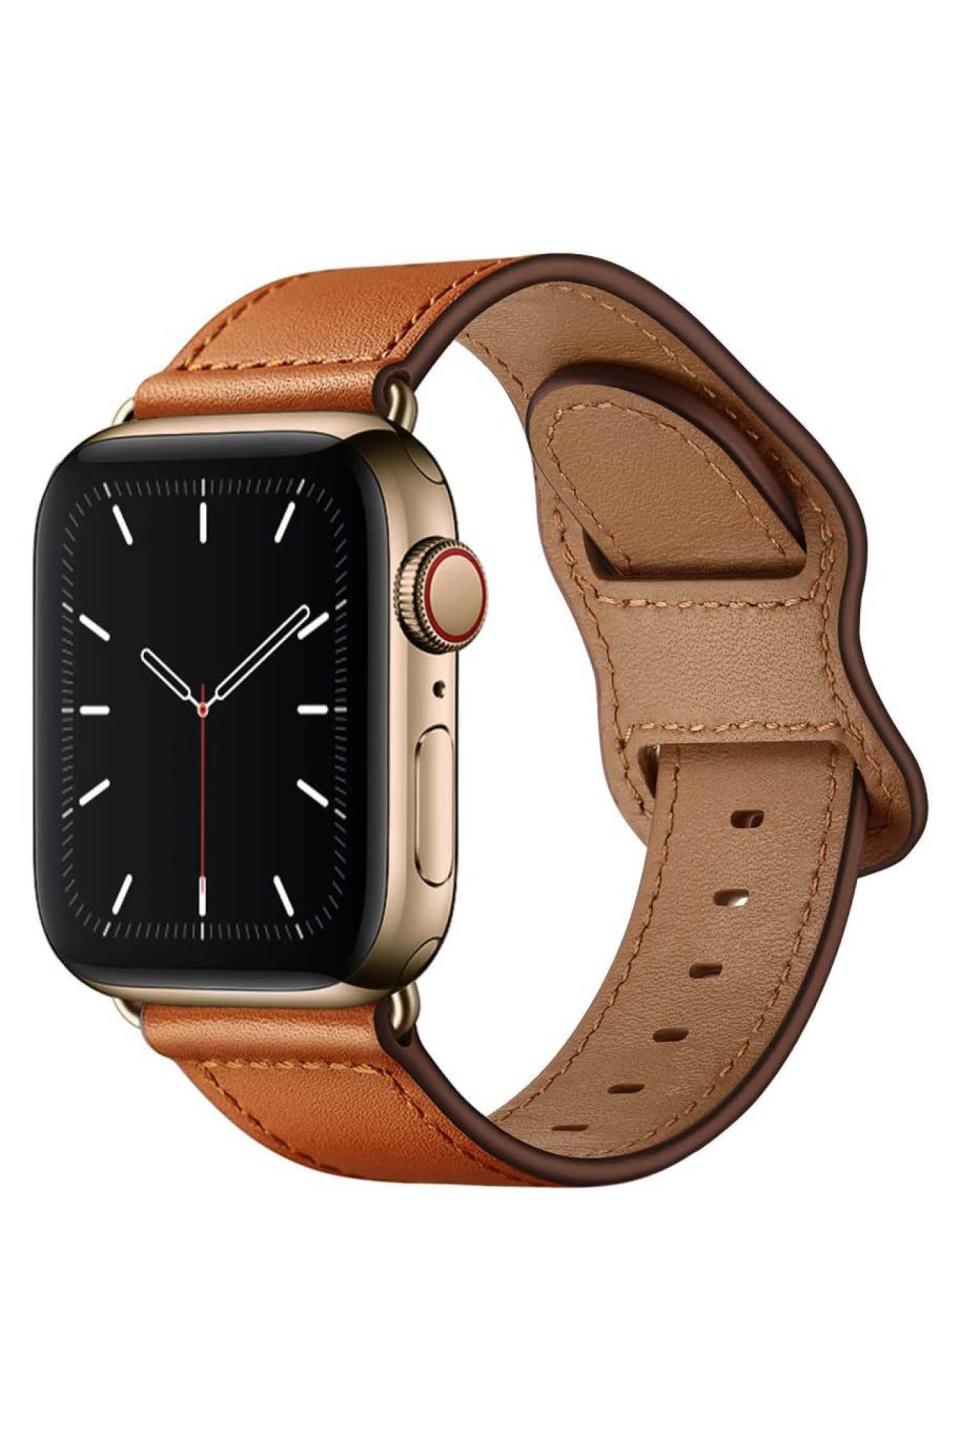 3) Kyisgos Apple Watch Band